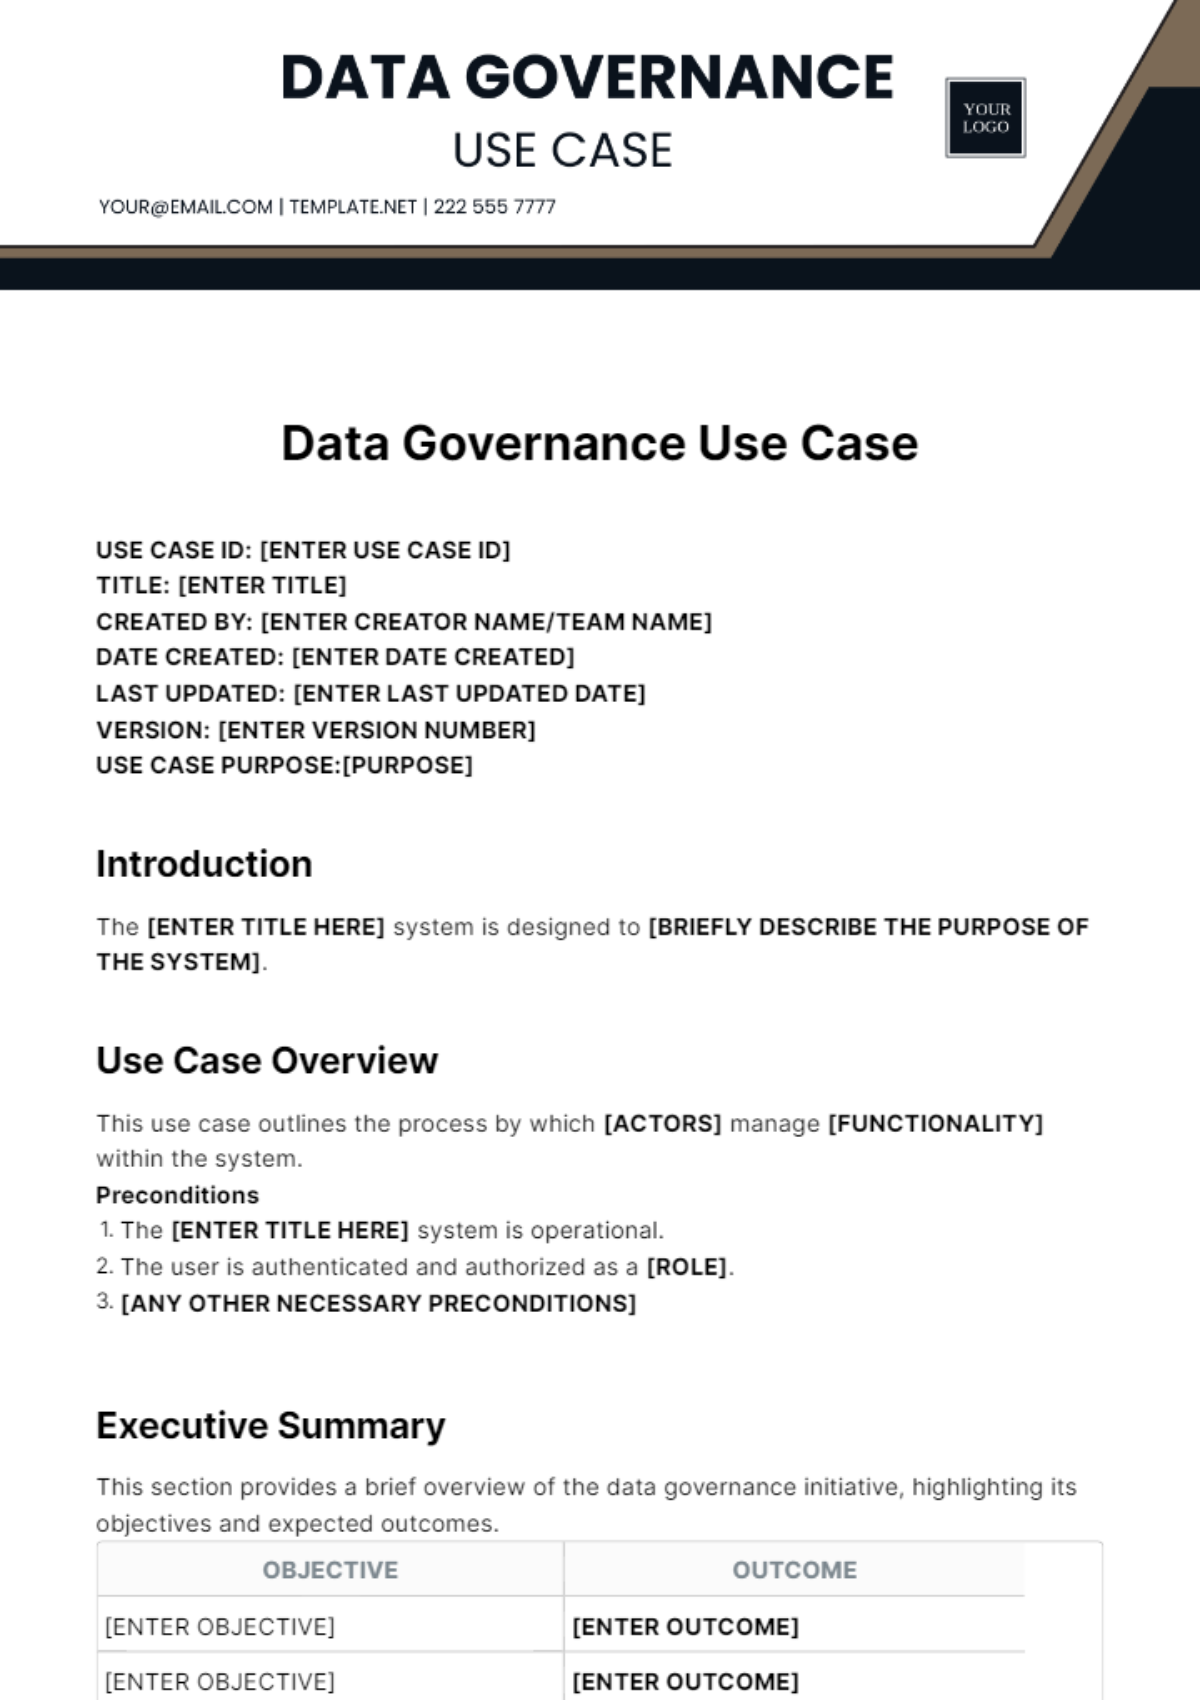 Data Governance Use Case Template